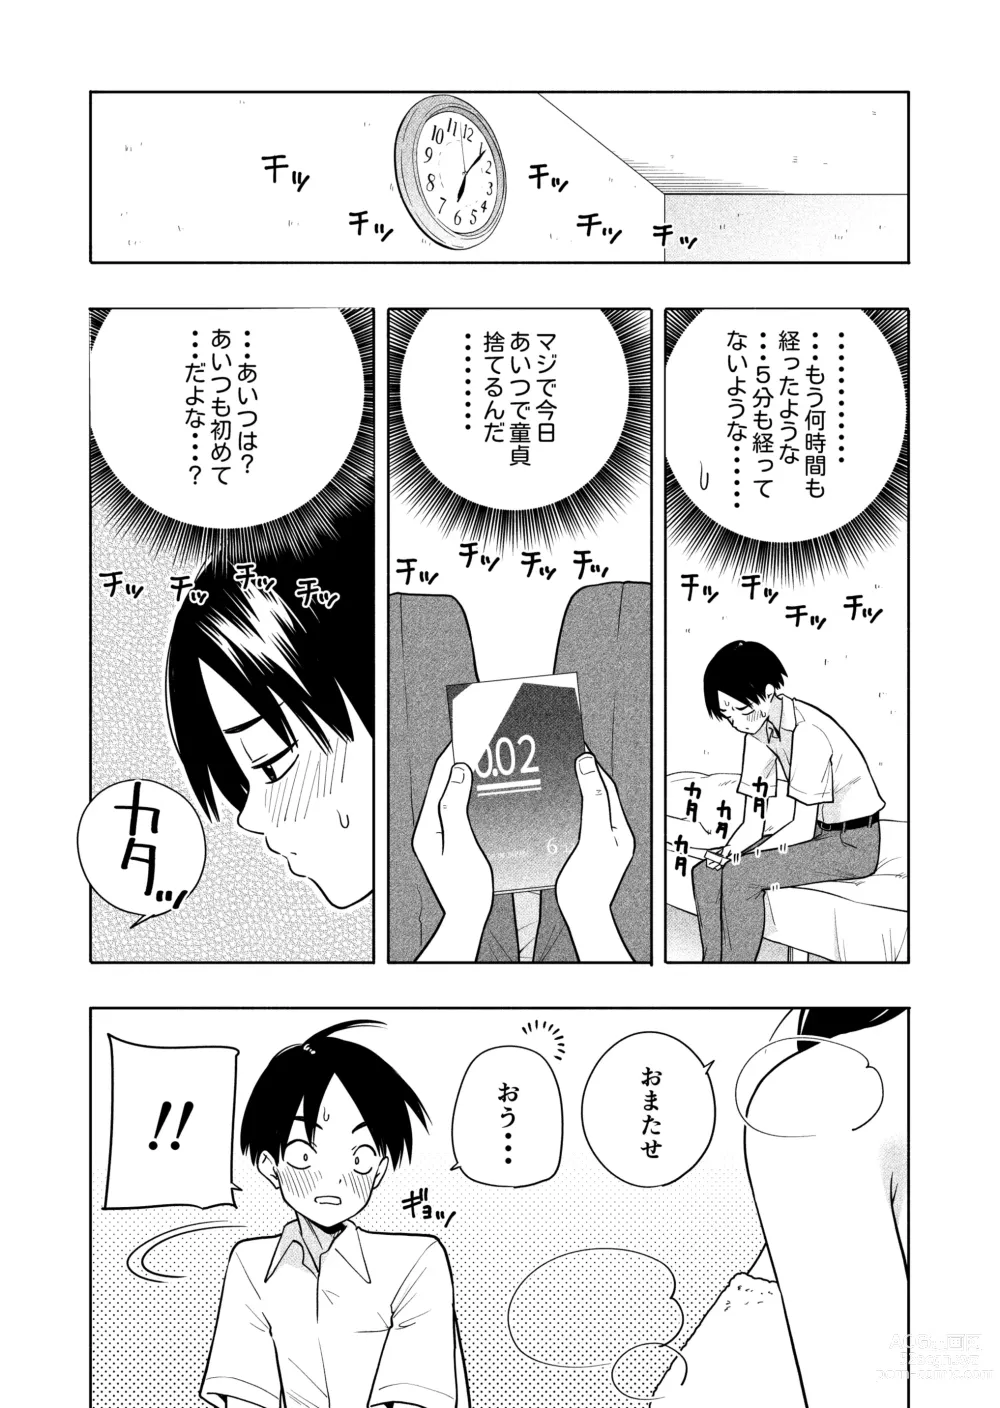 Page 19 of doujinshi Hoshikute, Motomete.